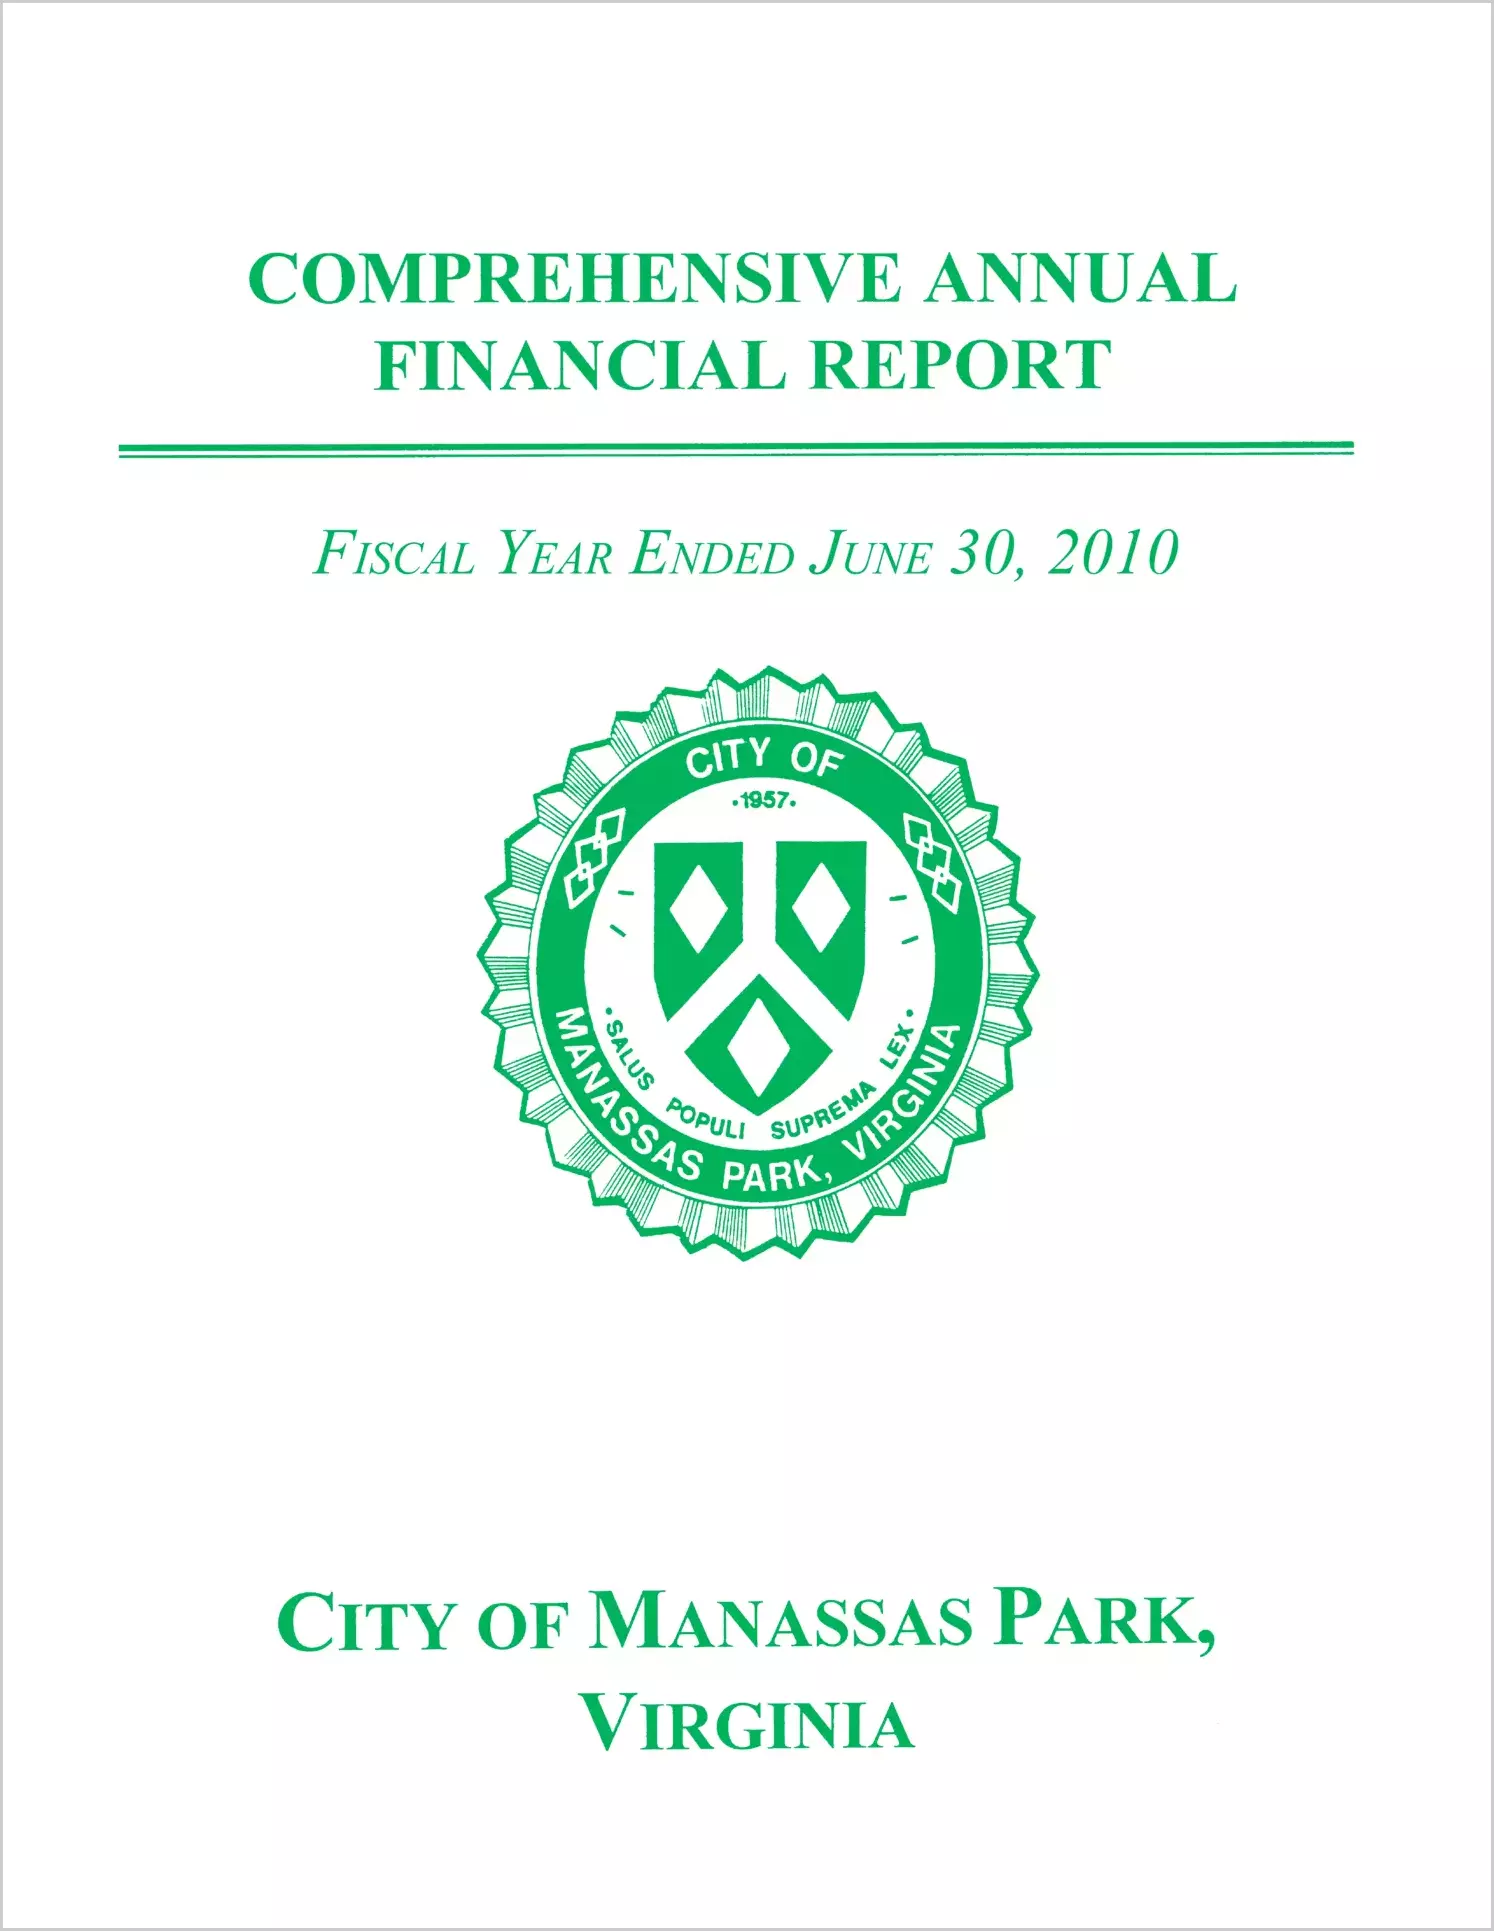 2010 Annual Financial Report for City of Manassas Park